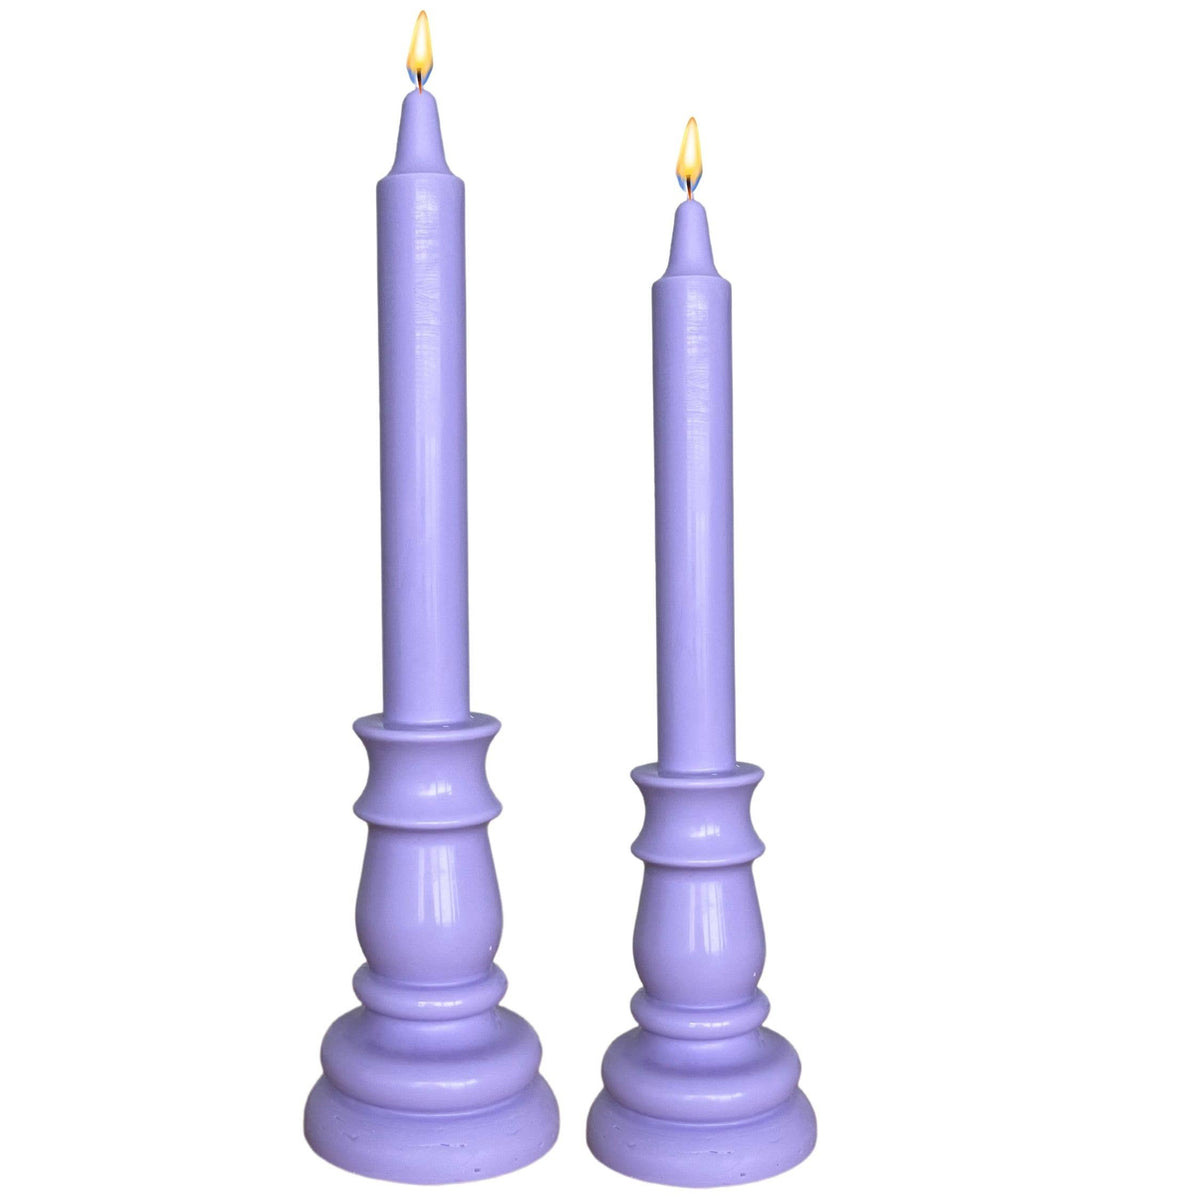 Candela Candles - Provence Lavender | NÉOS CANDLESTUDIO